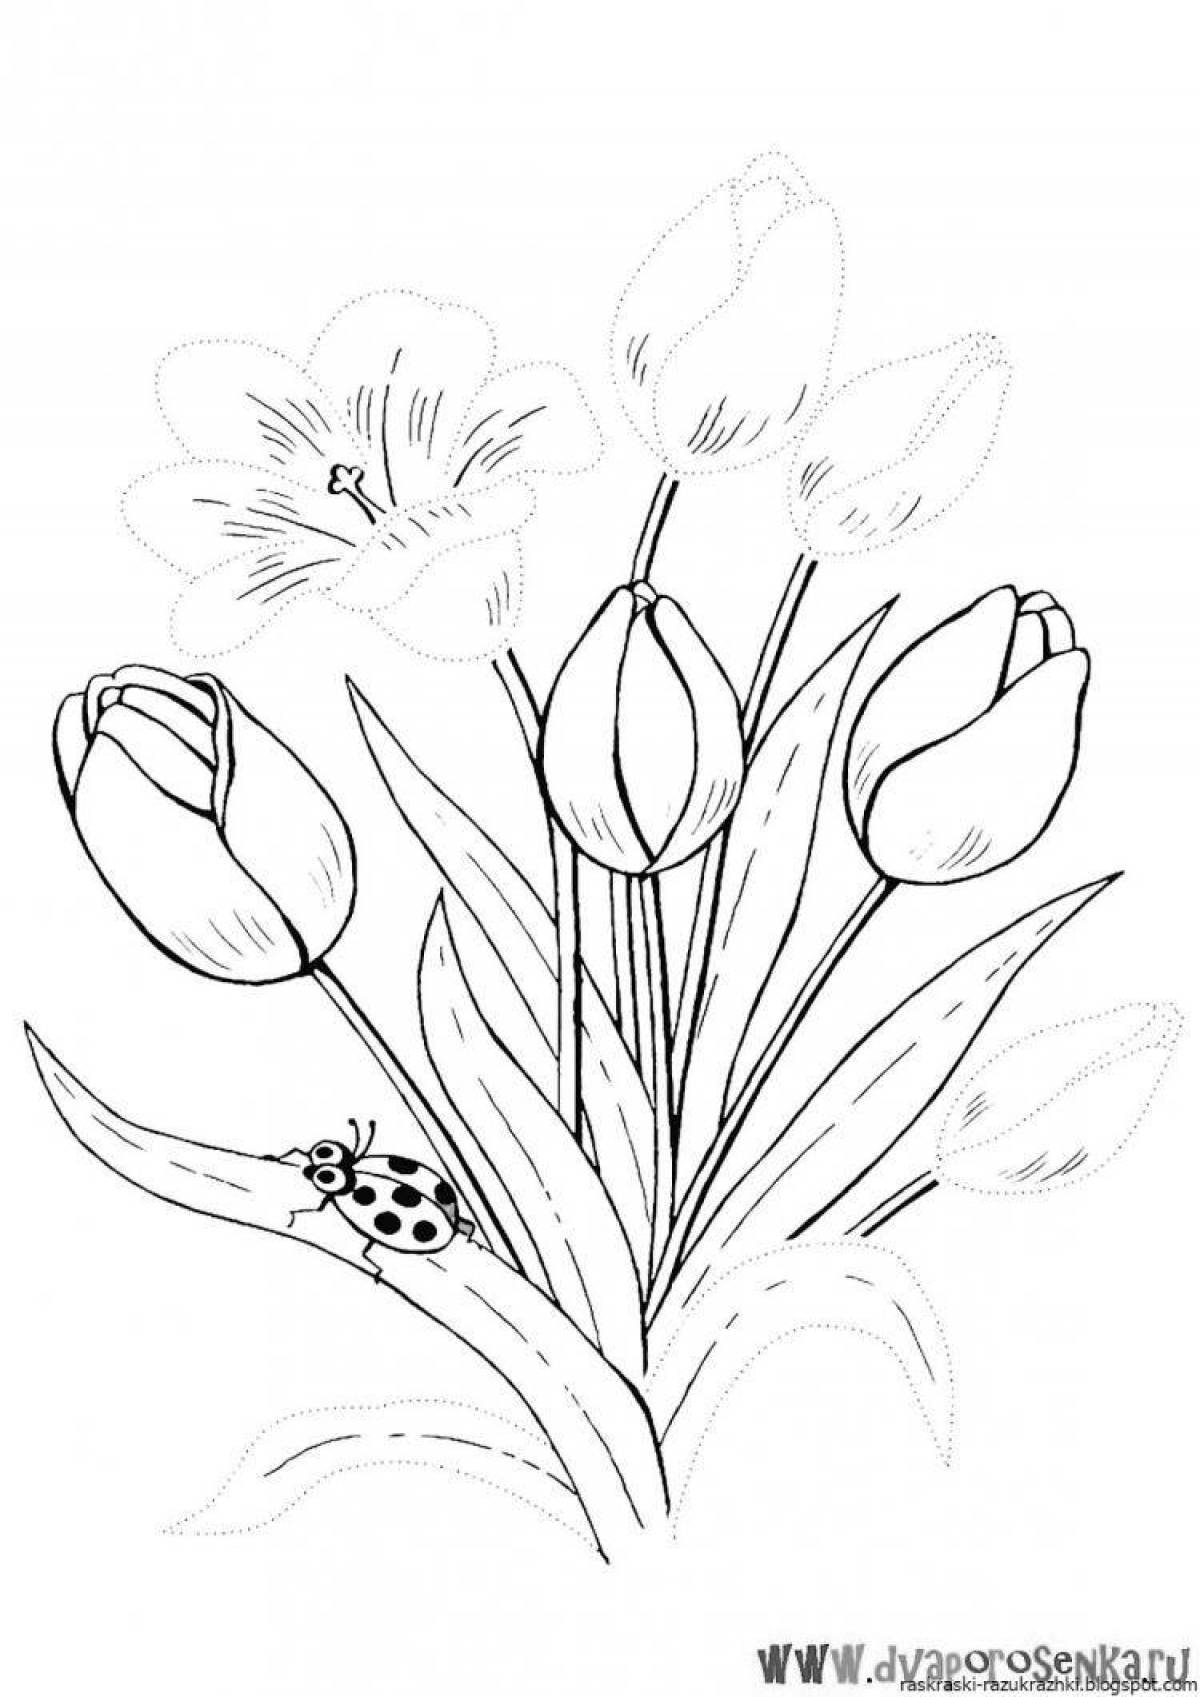 Violent tulip coloring book